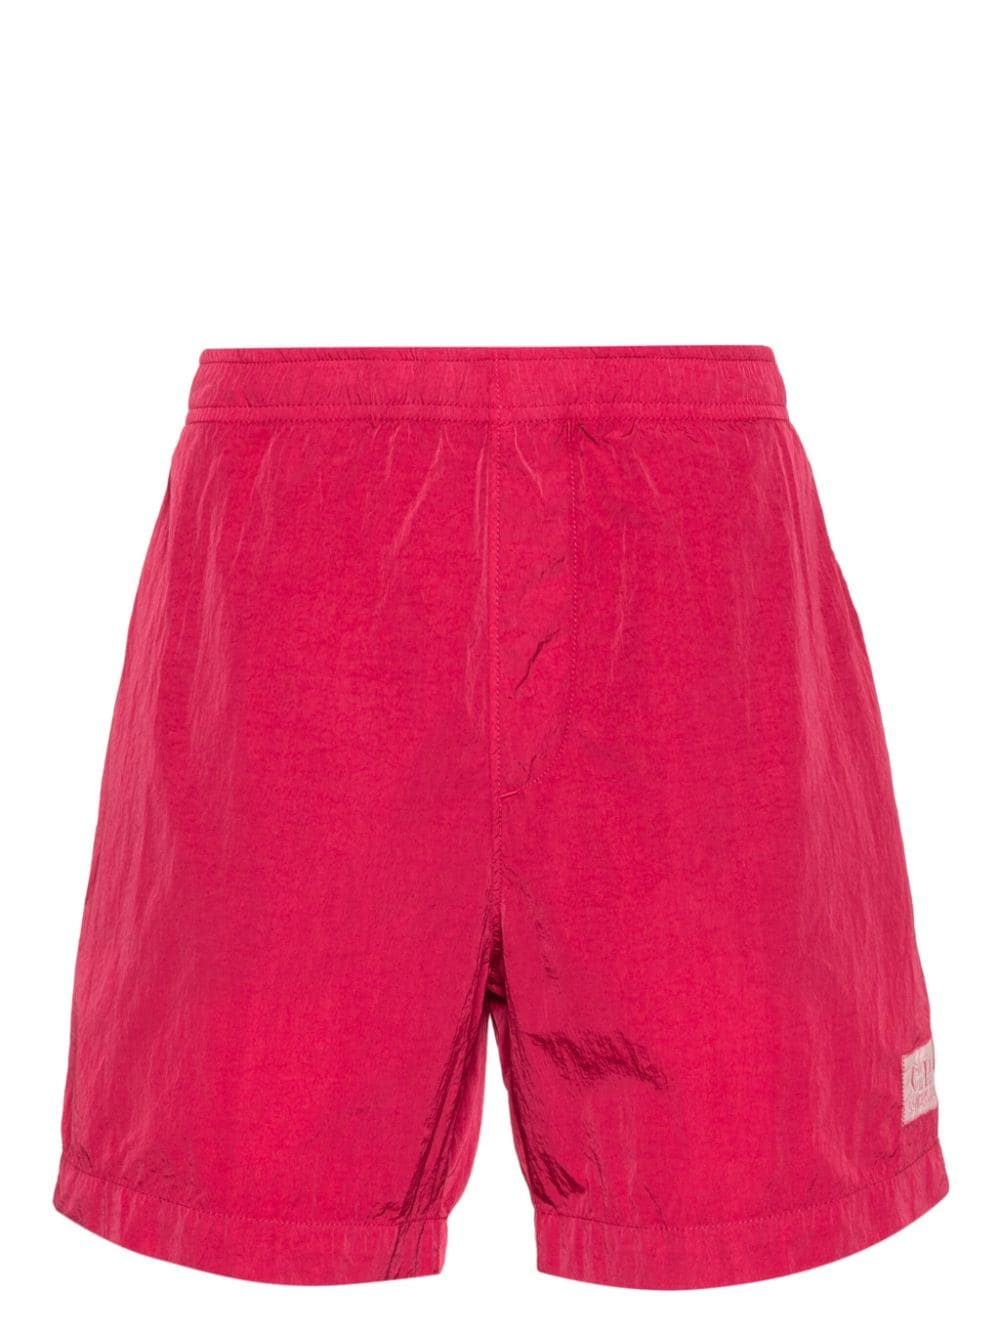 C.P. Company Eco-Chrome R swim shorts - Red von C.P. Company